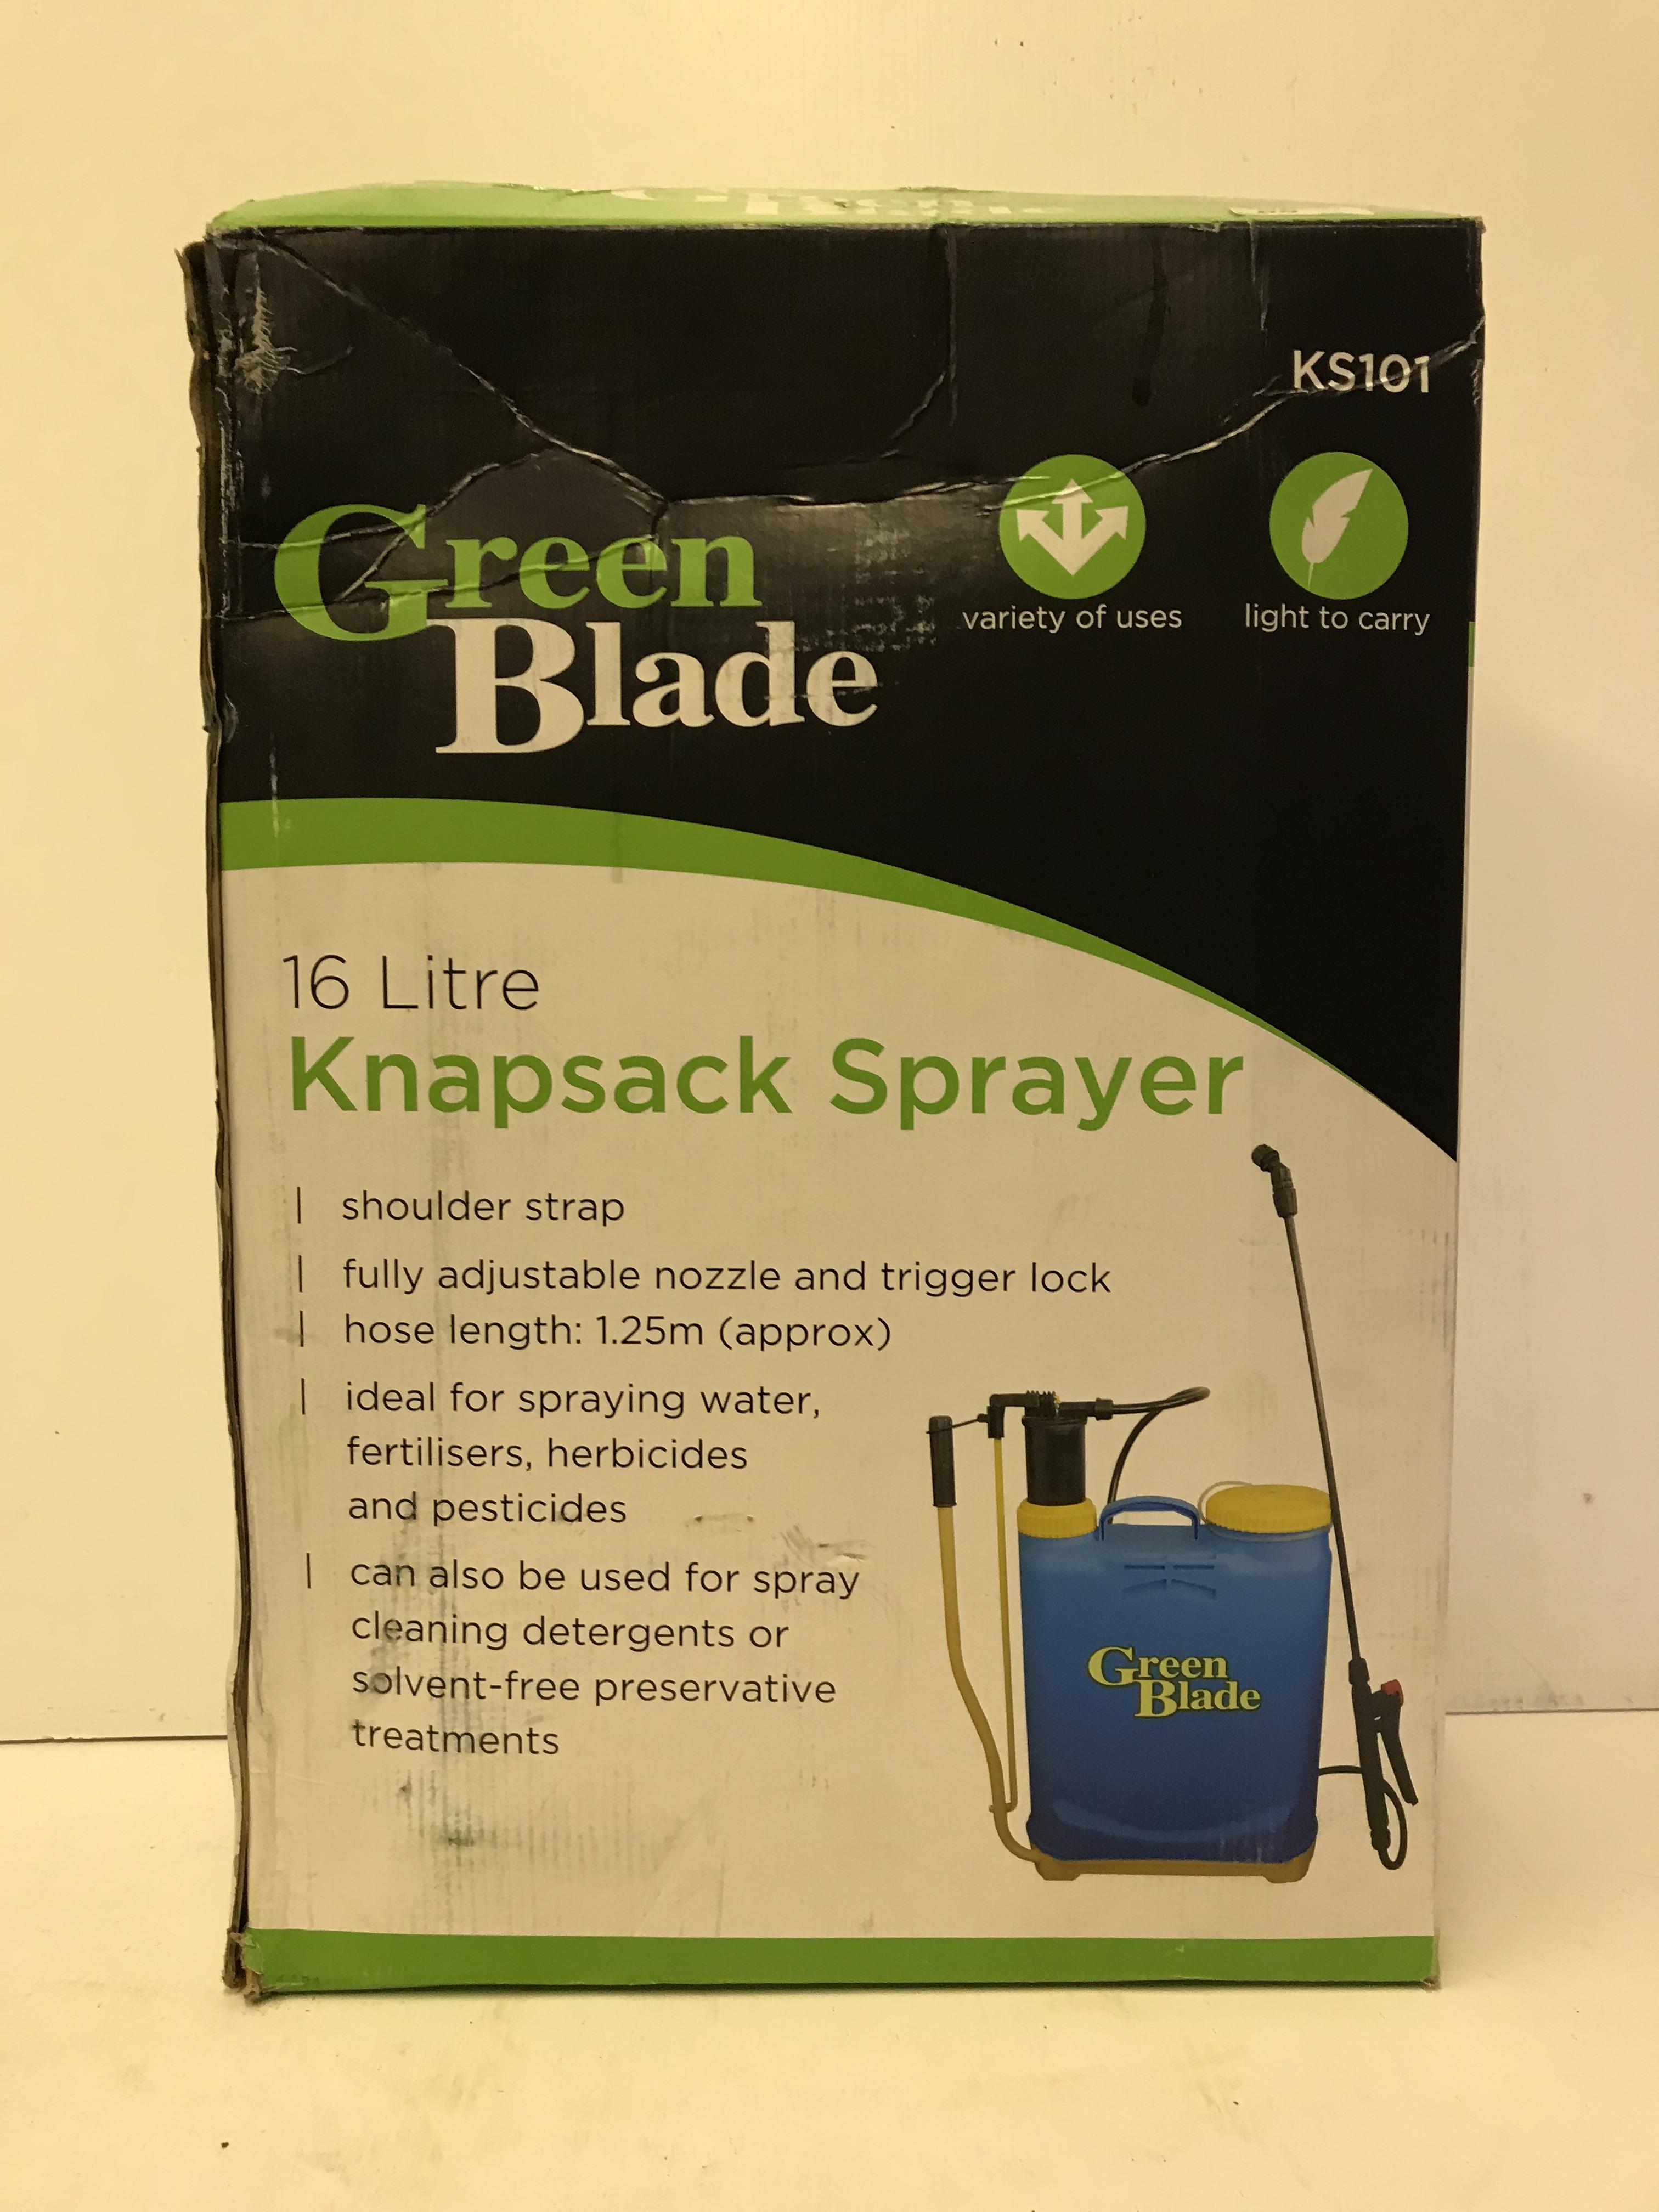 A Green Blade 16 litre knapsack sprayer - Image 2 of 2